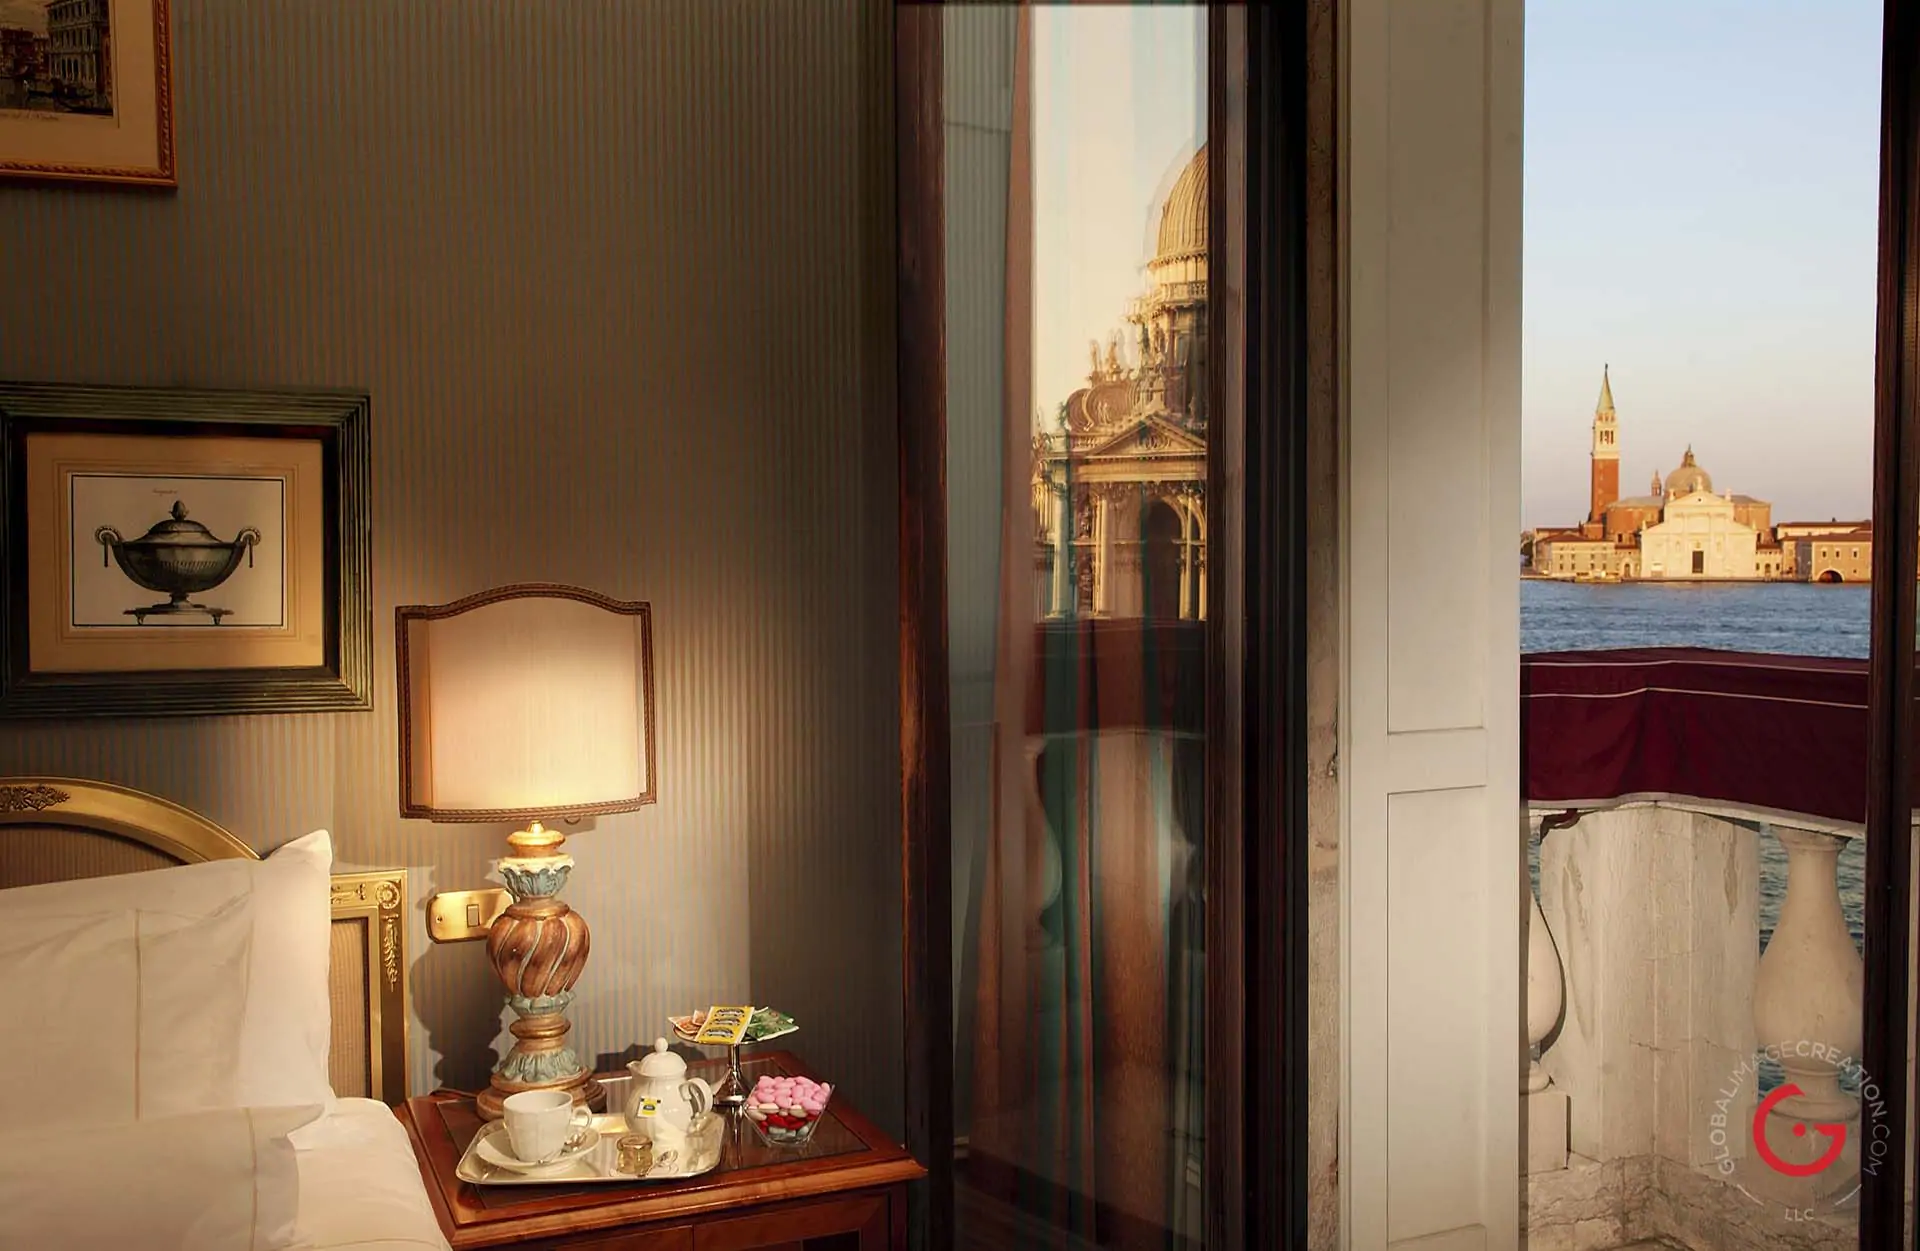 Hotel Photographers, Luxury Hotel Photography, Resort Photographer of Monet Room at Regina and Europa, Venice, Italy